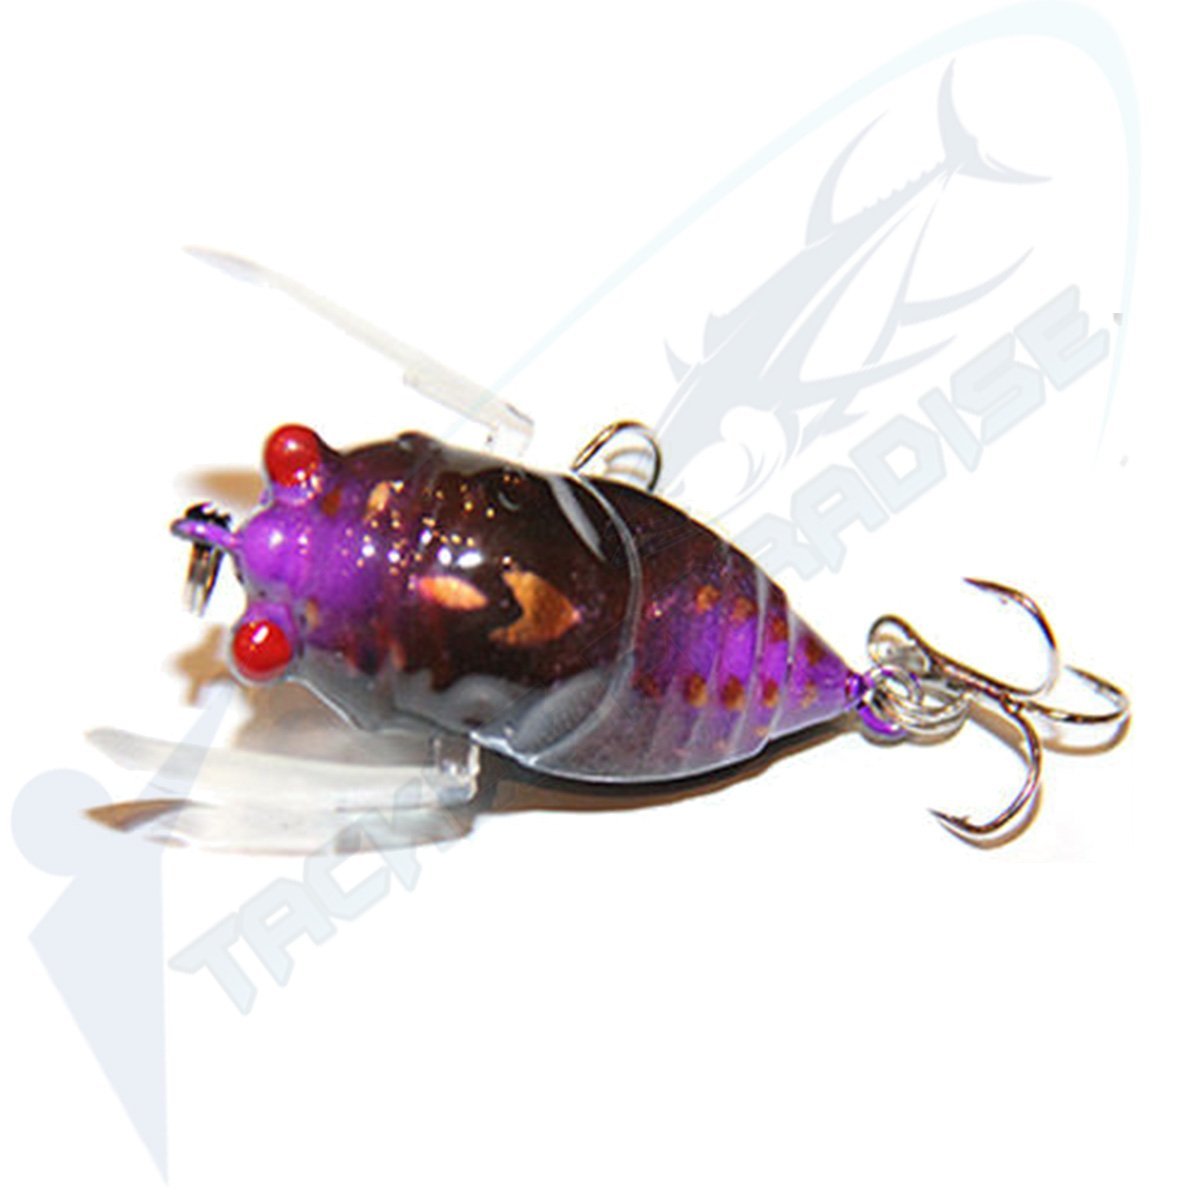 40mm Winged Cicada Topwater Crawler Fishing Lure